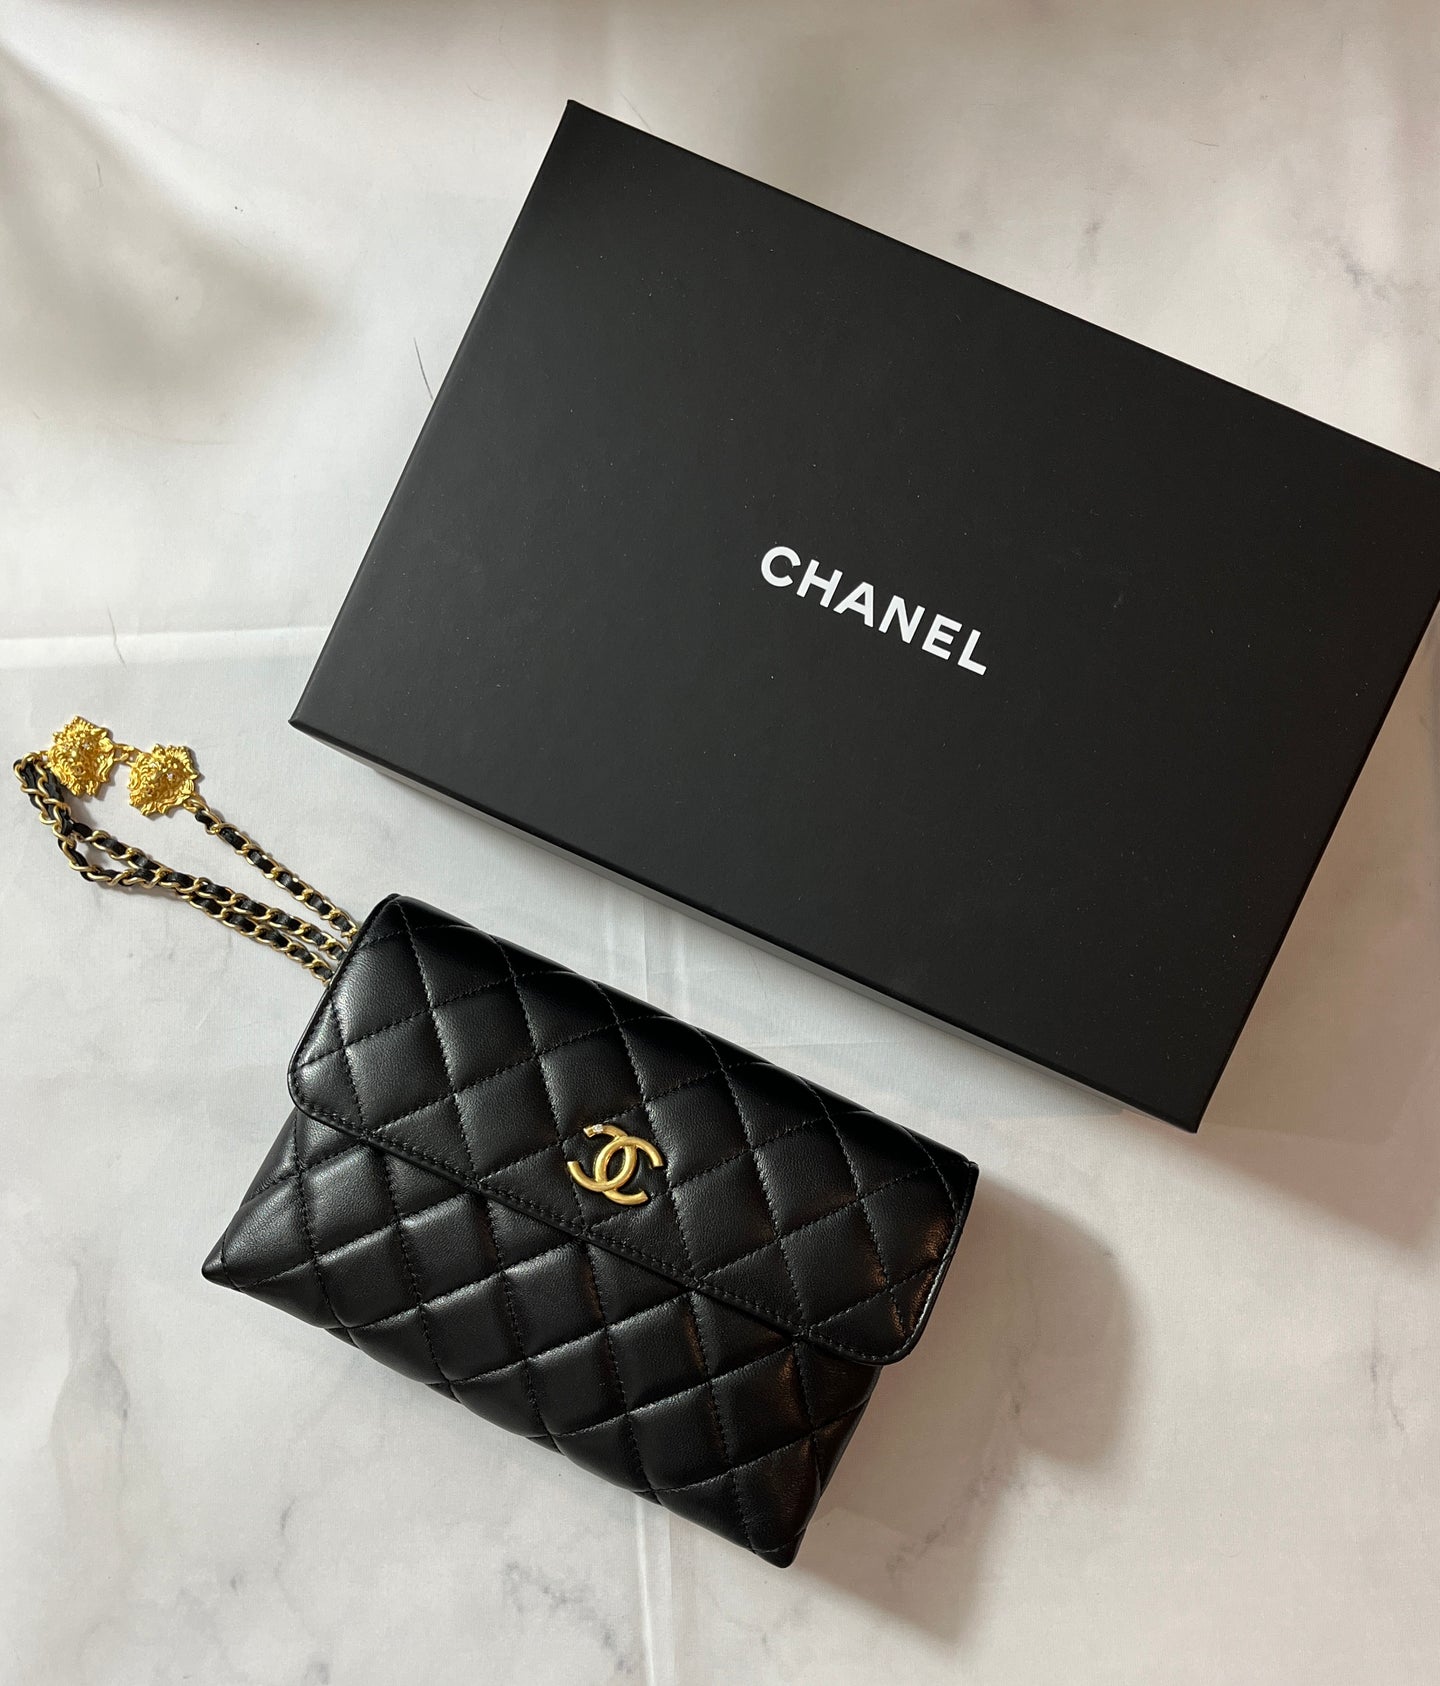 Chanel Black Quilted Wristlet Clutch Bag